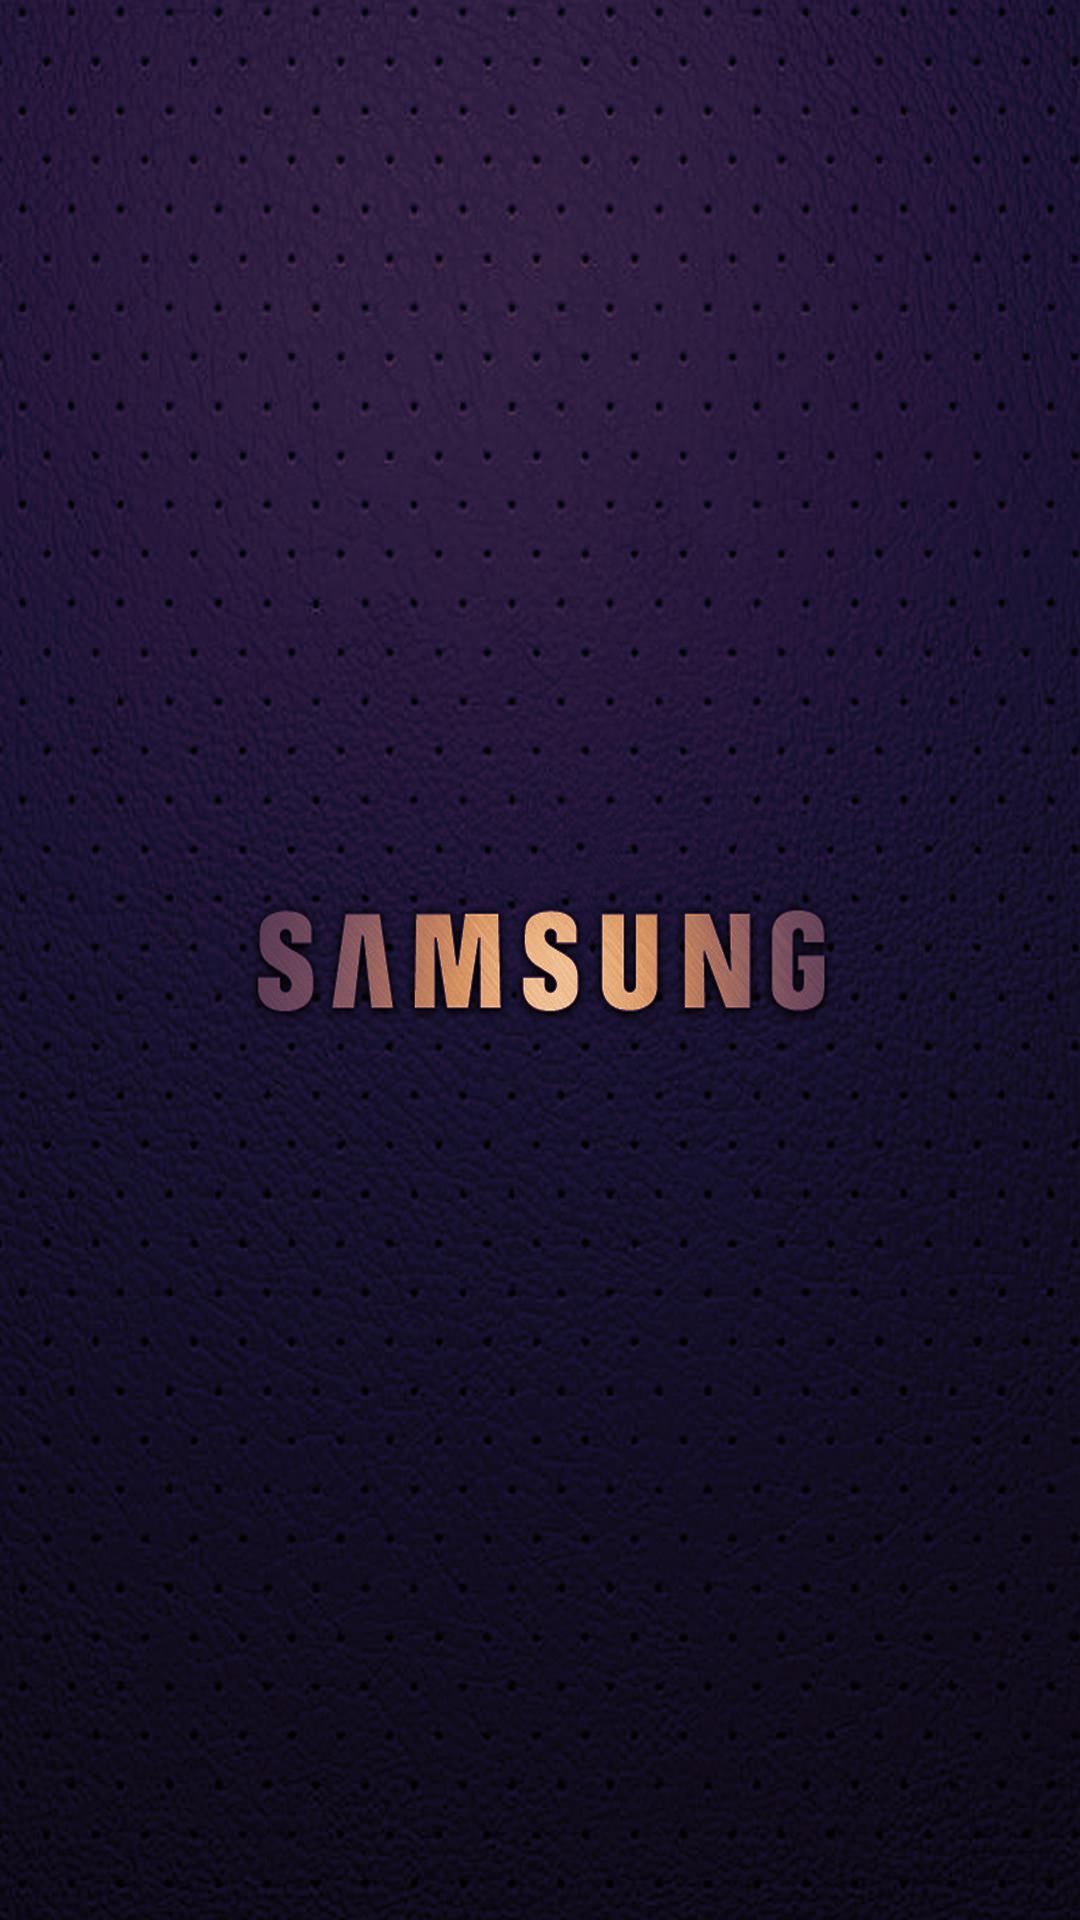 SAMSUNG logo wallpapersc SmartPhone 1080x1920